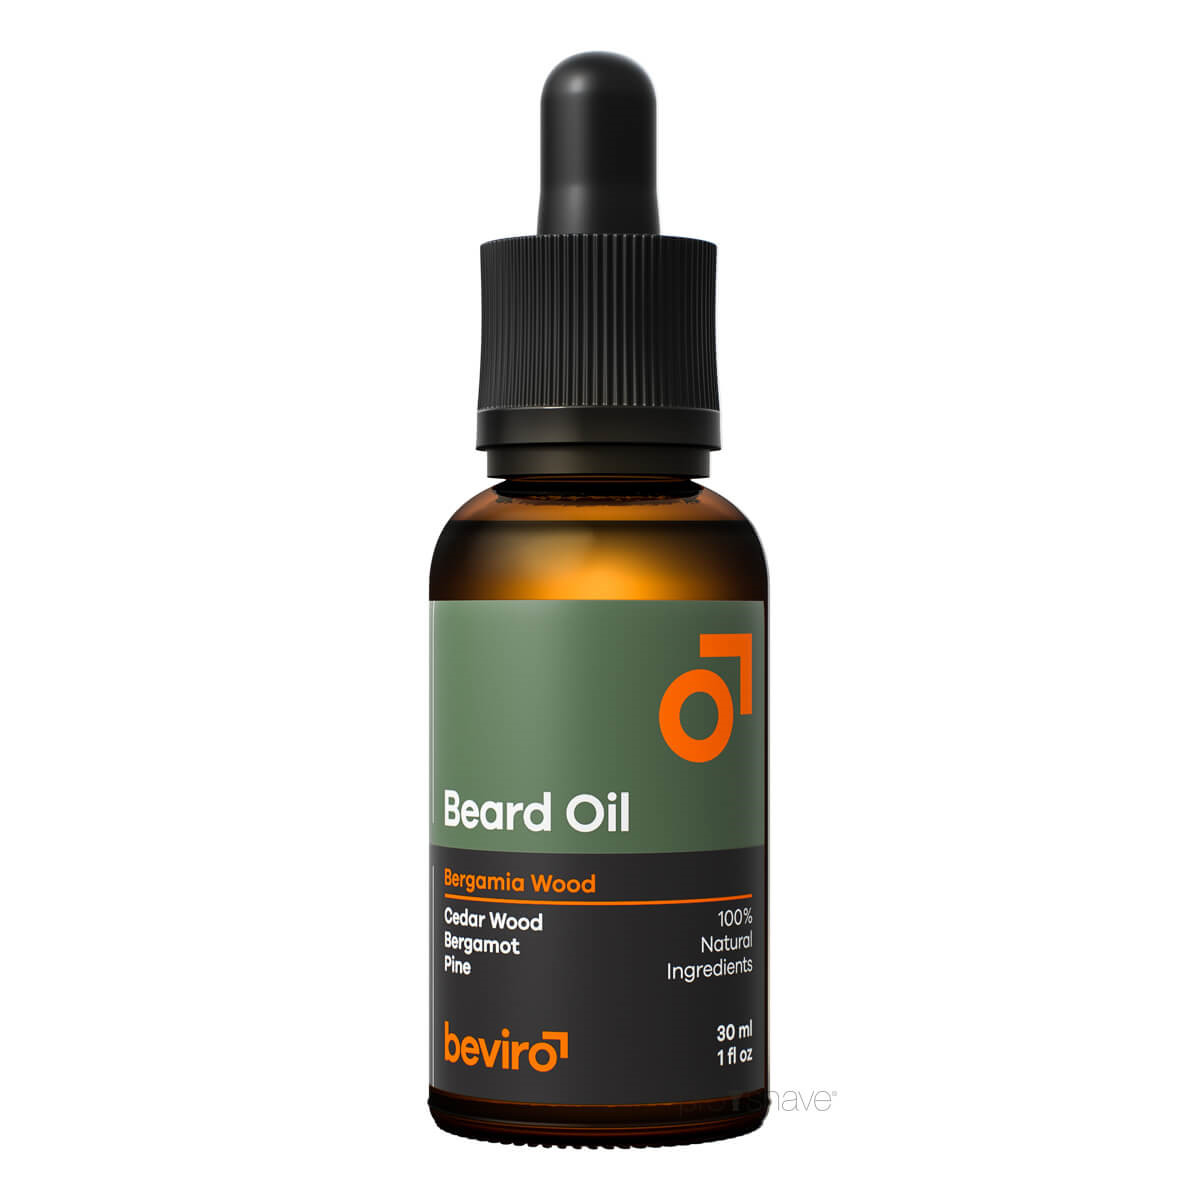 Se Beviro Beard Oil, Bergamia Wood, 30 ml. hos Proshave